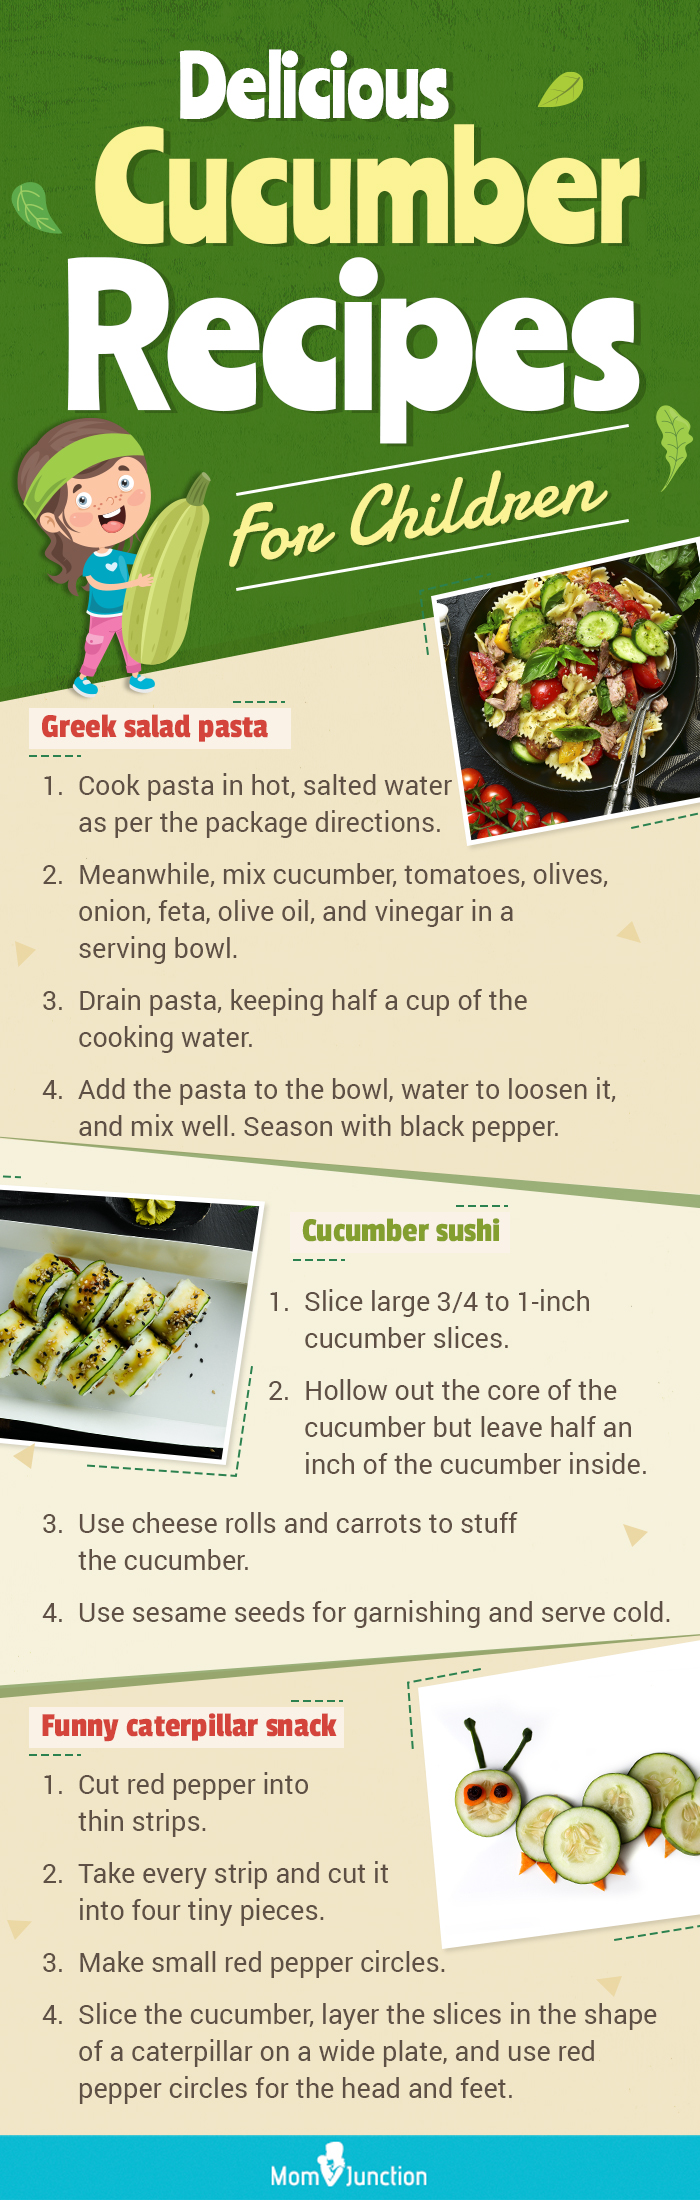 delicious cucumber recipes for children (infographic)